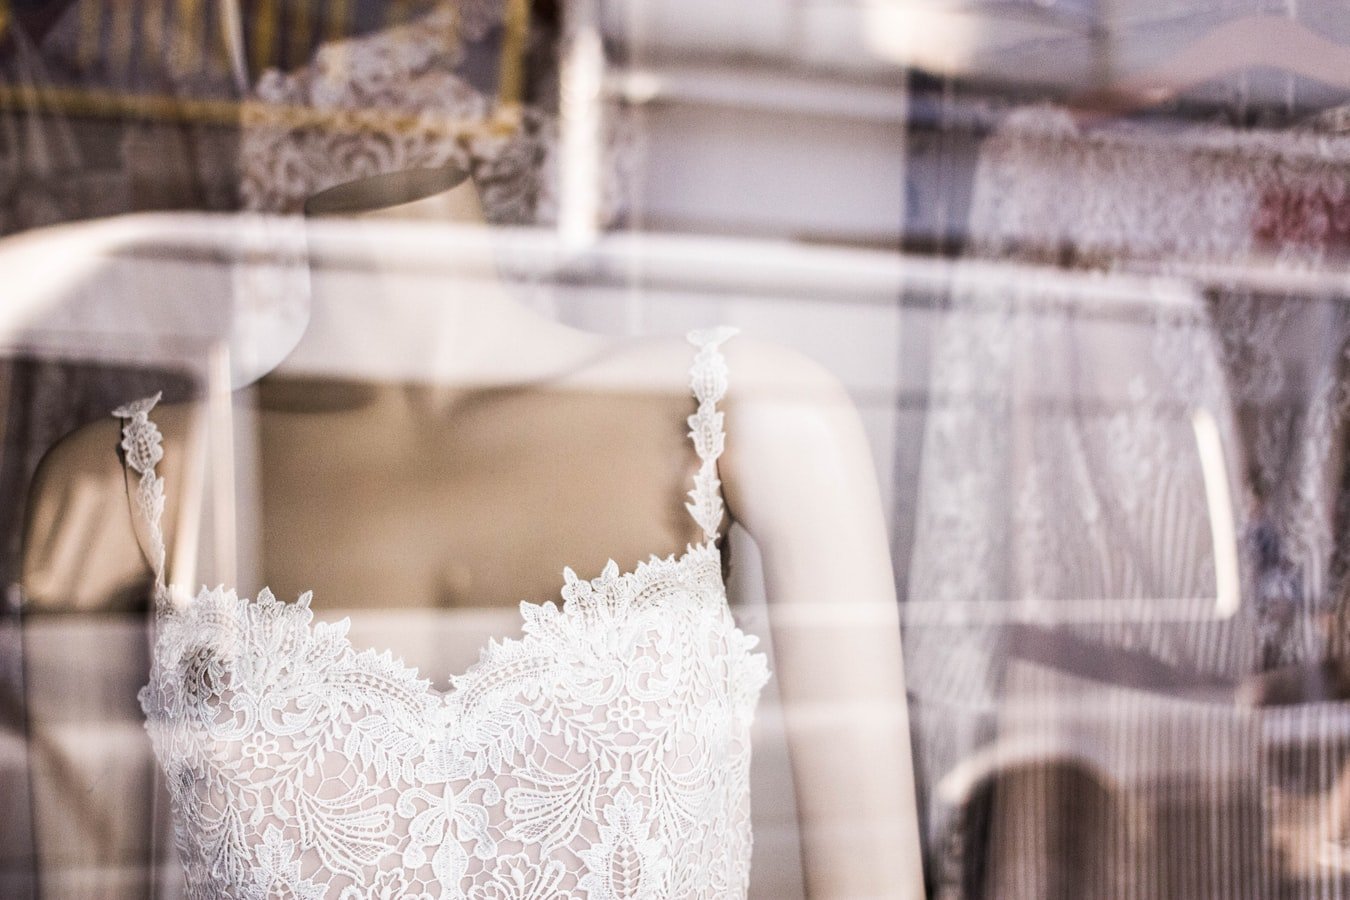 The wedding dress shop | Source: Unsplash